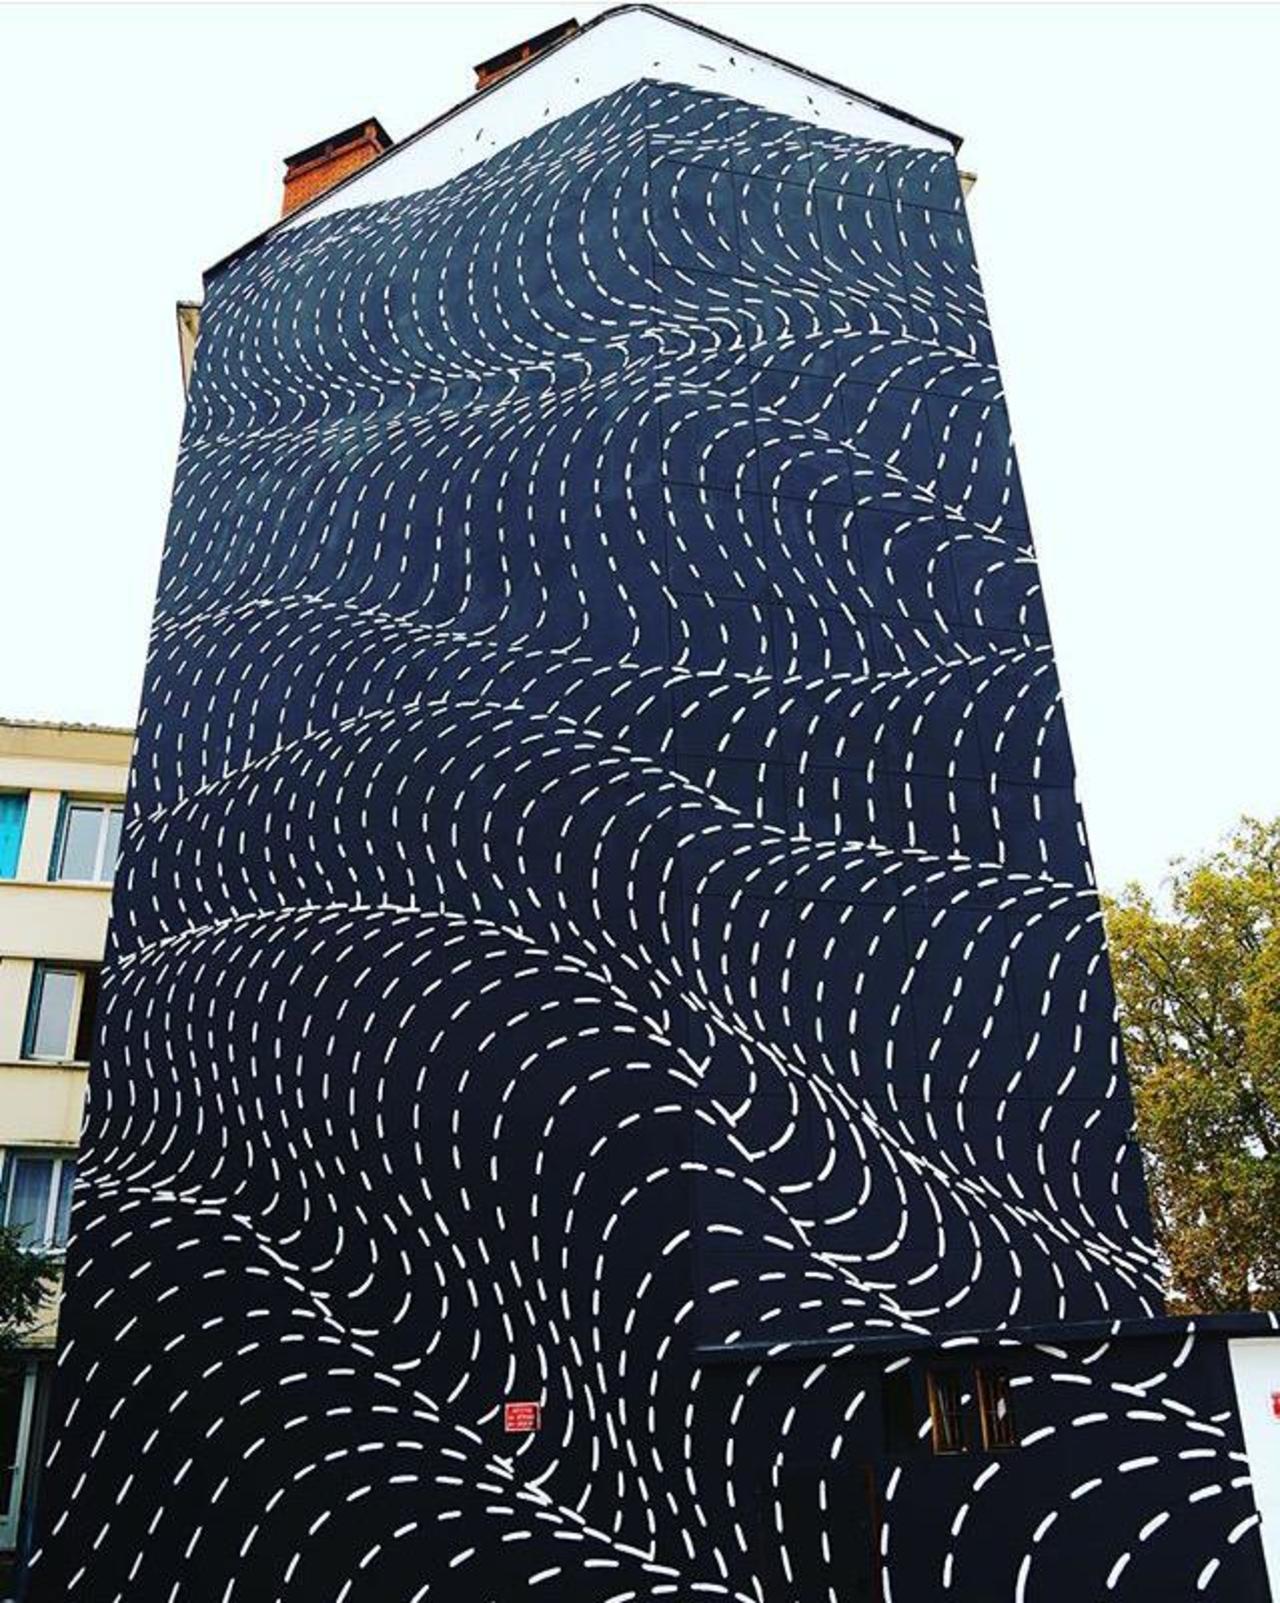 New Street Art by Brendan Monroe's for WOPS ! Festival in Toulouse, France. 

#art #graffiti #mural #streetart https://t.co/KigJ4xIdTs